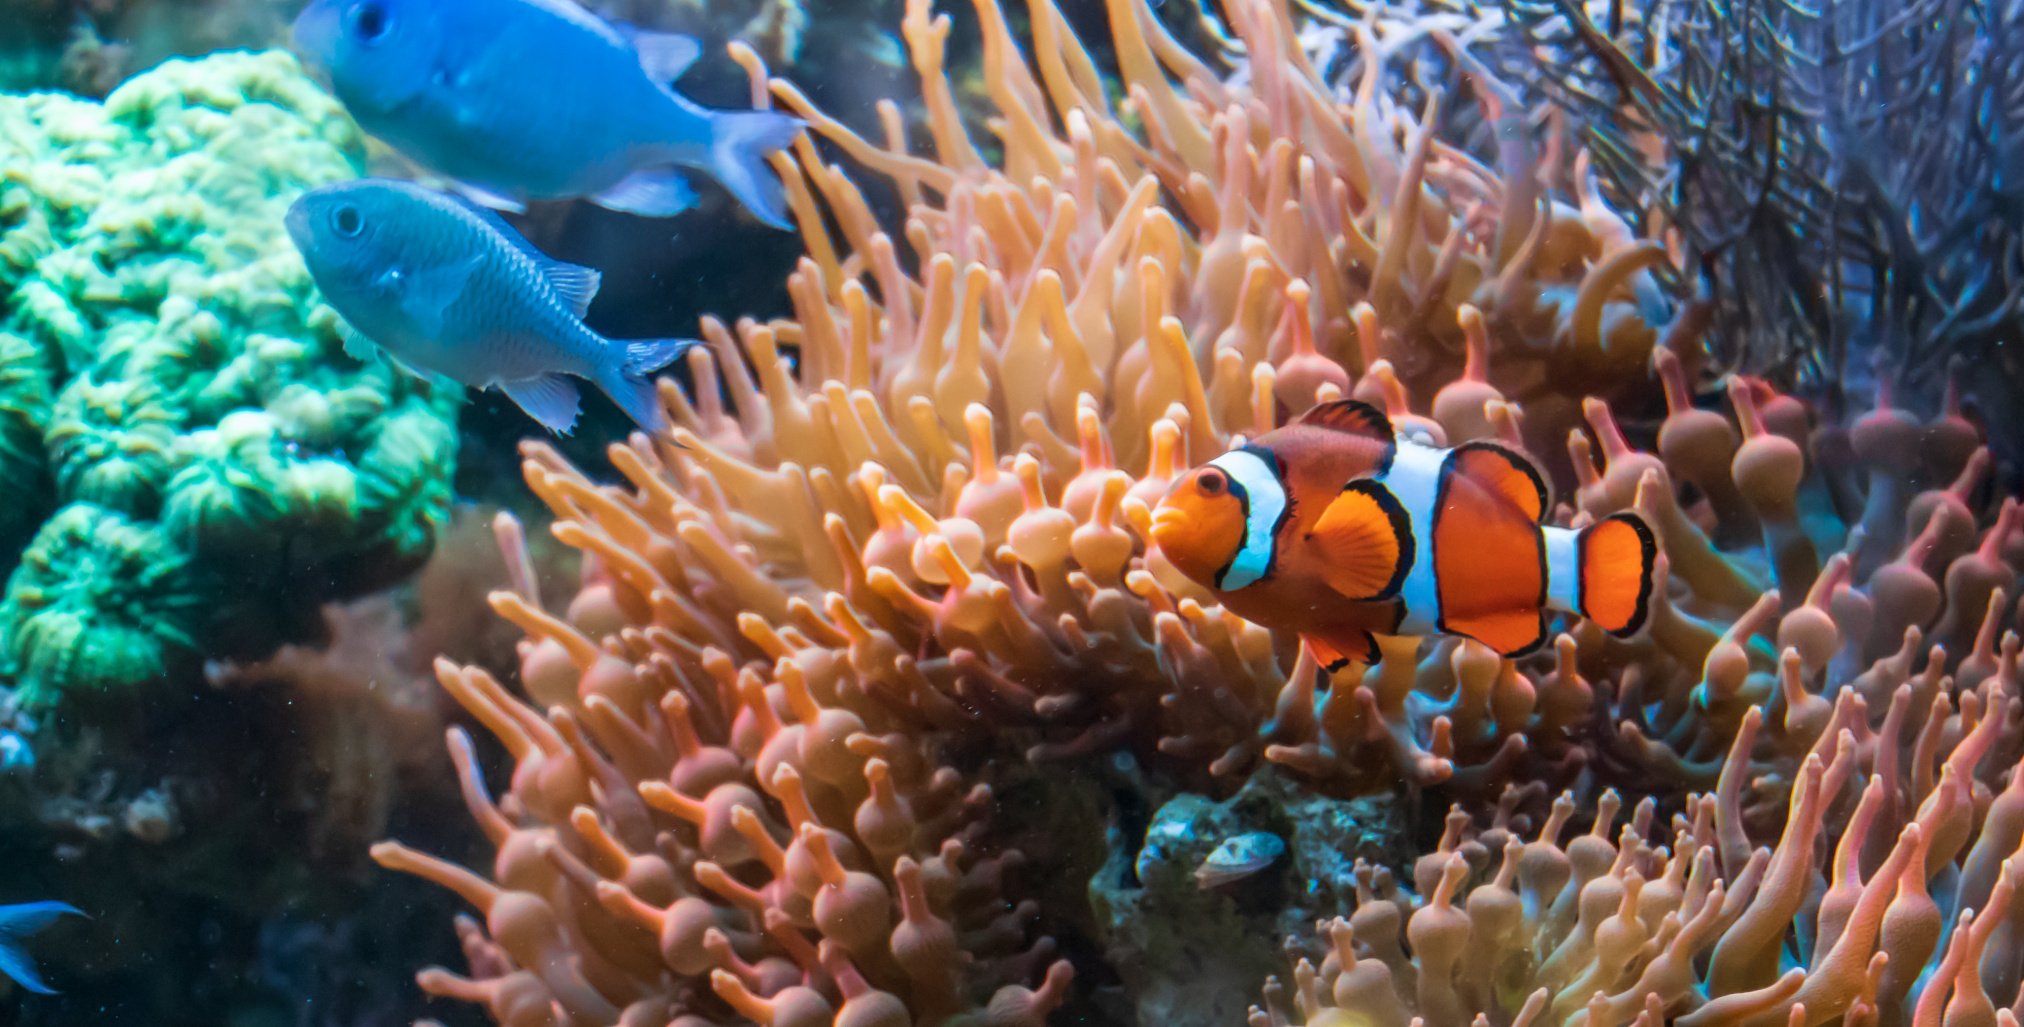 beautiful-clown-fish-and-blue-malawi-cichlids-swimming.jpg